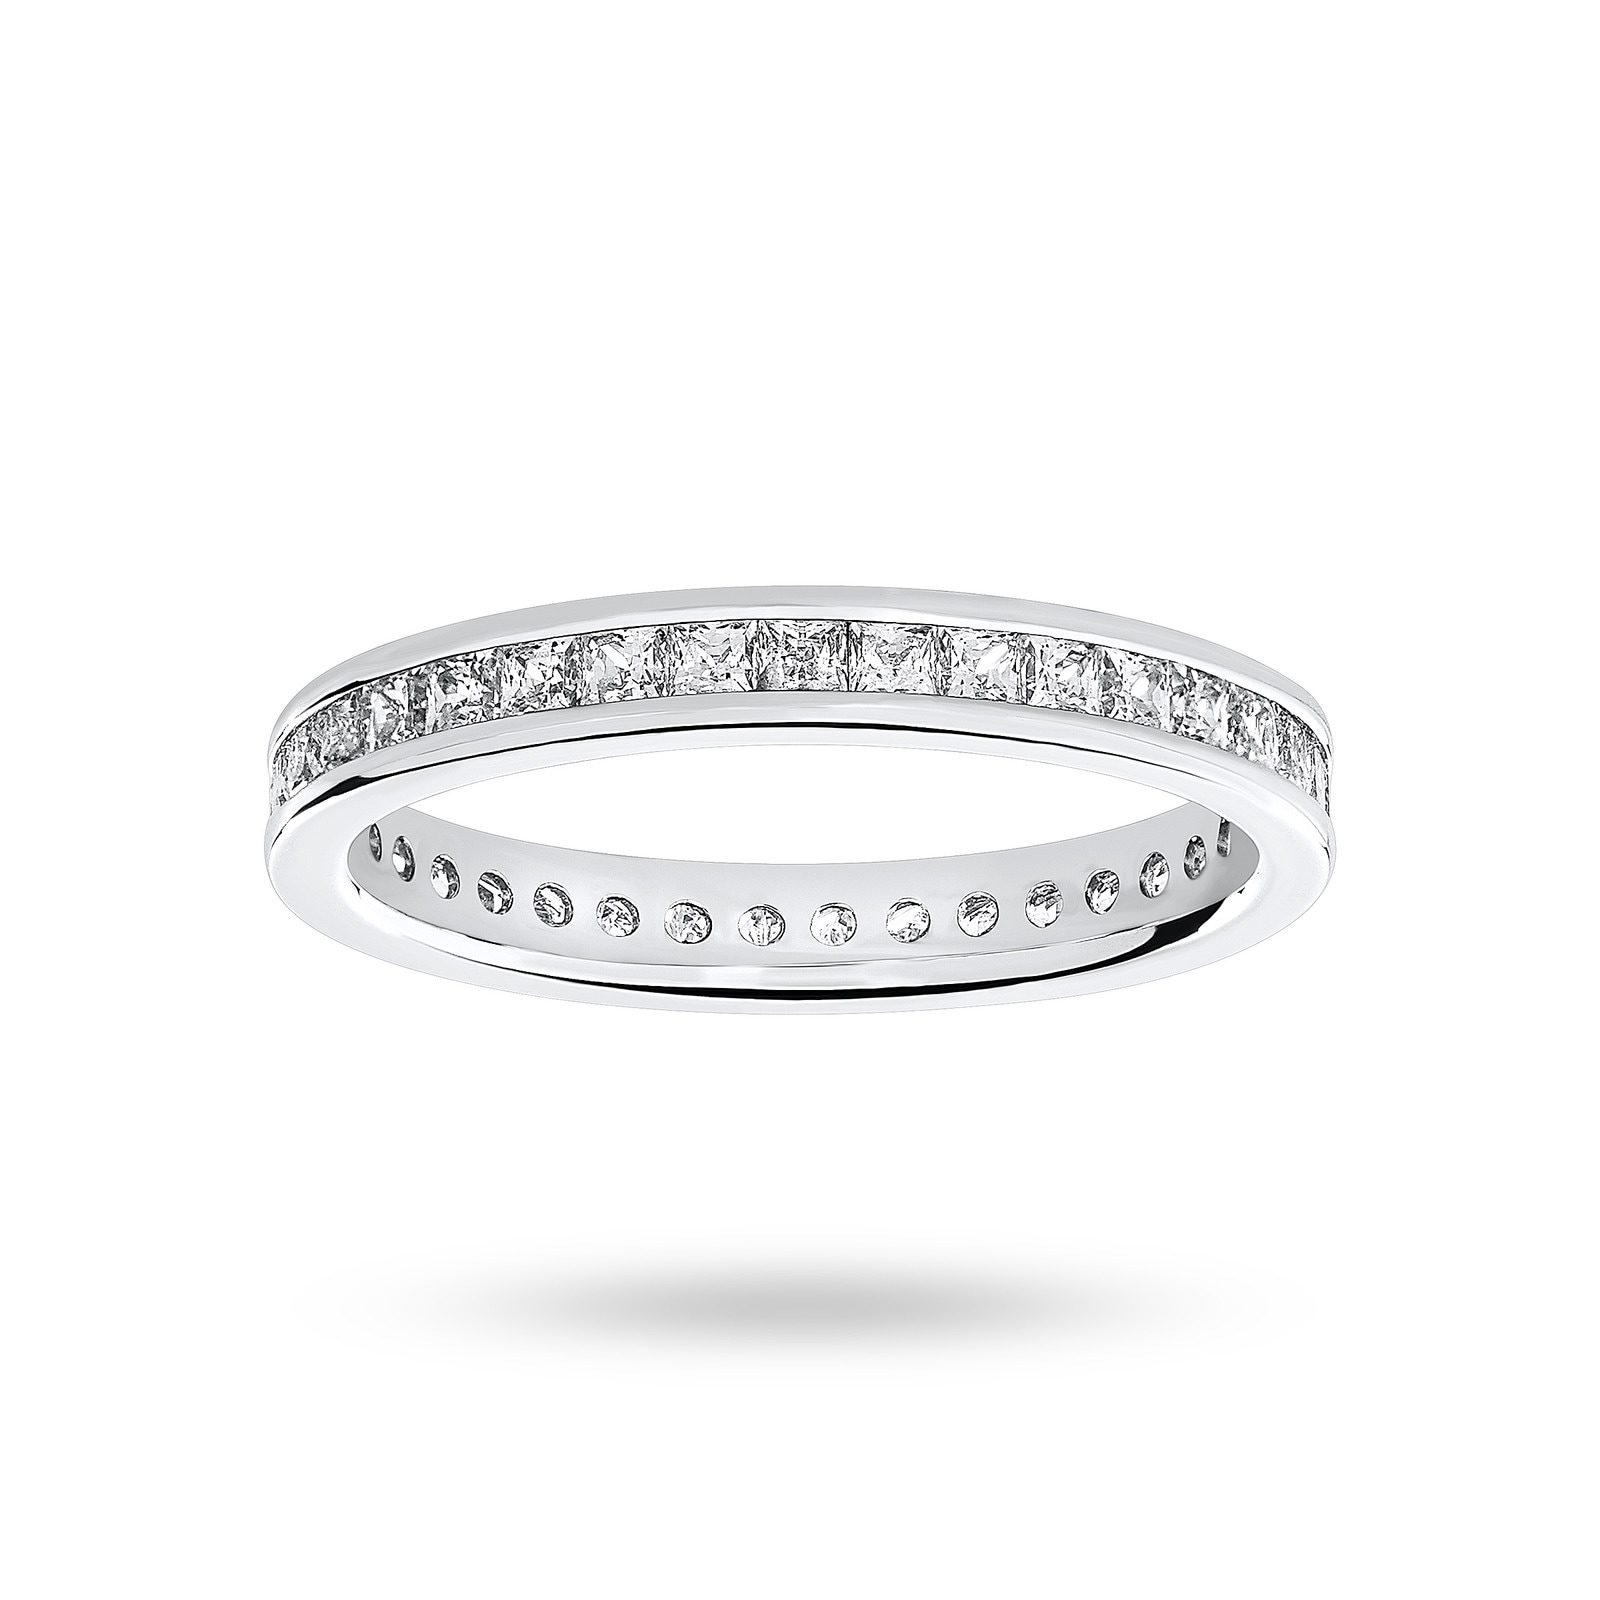 Platinum 1.00 Carat Princess Cut Channel Set Full Eternity Ring - Ring Size N